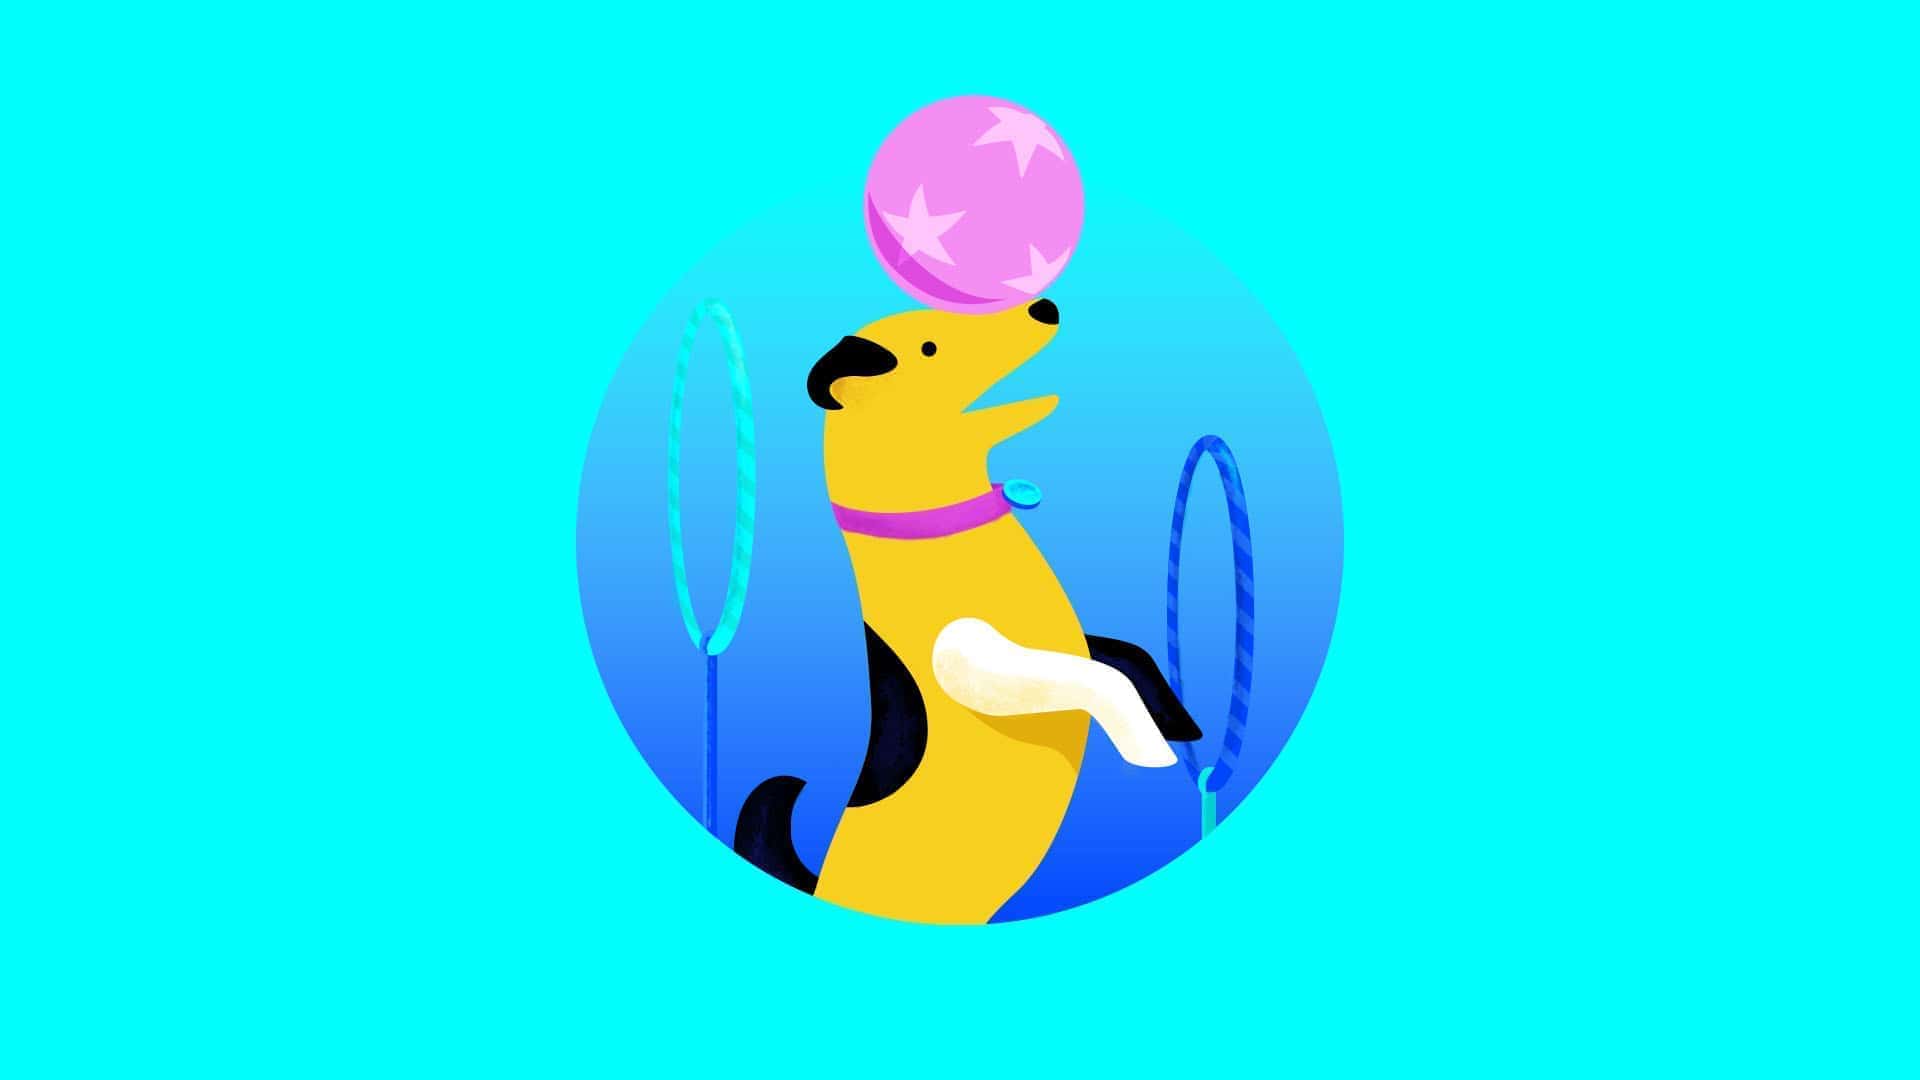 Illustration of a dog doing a trick